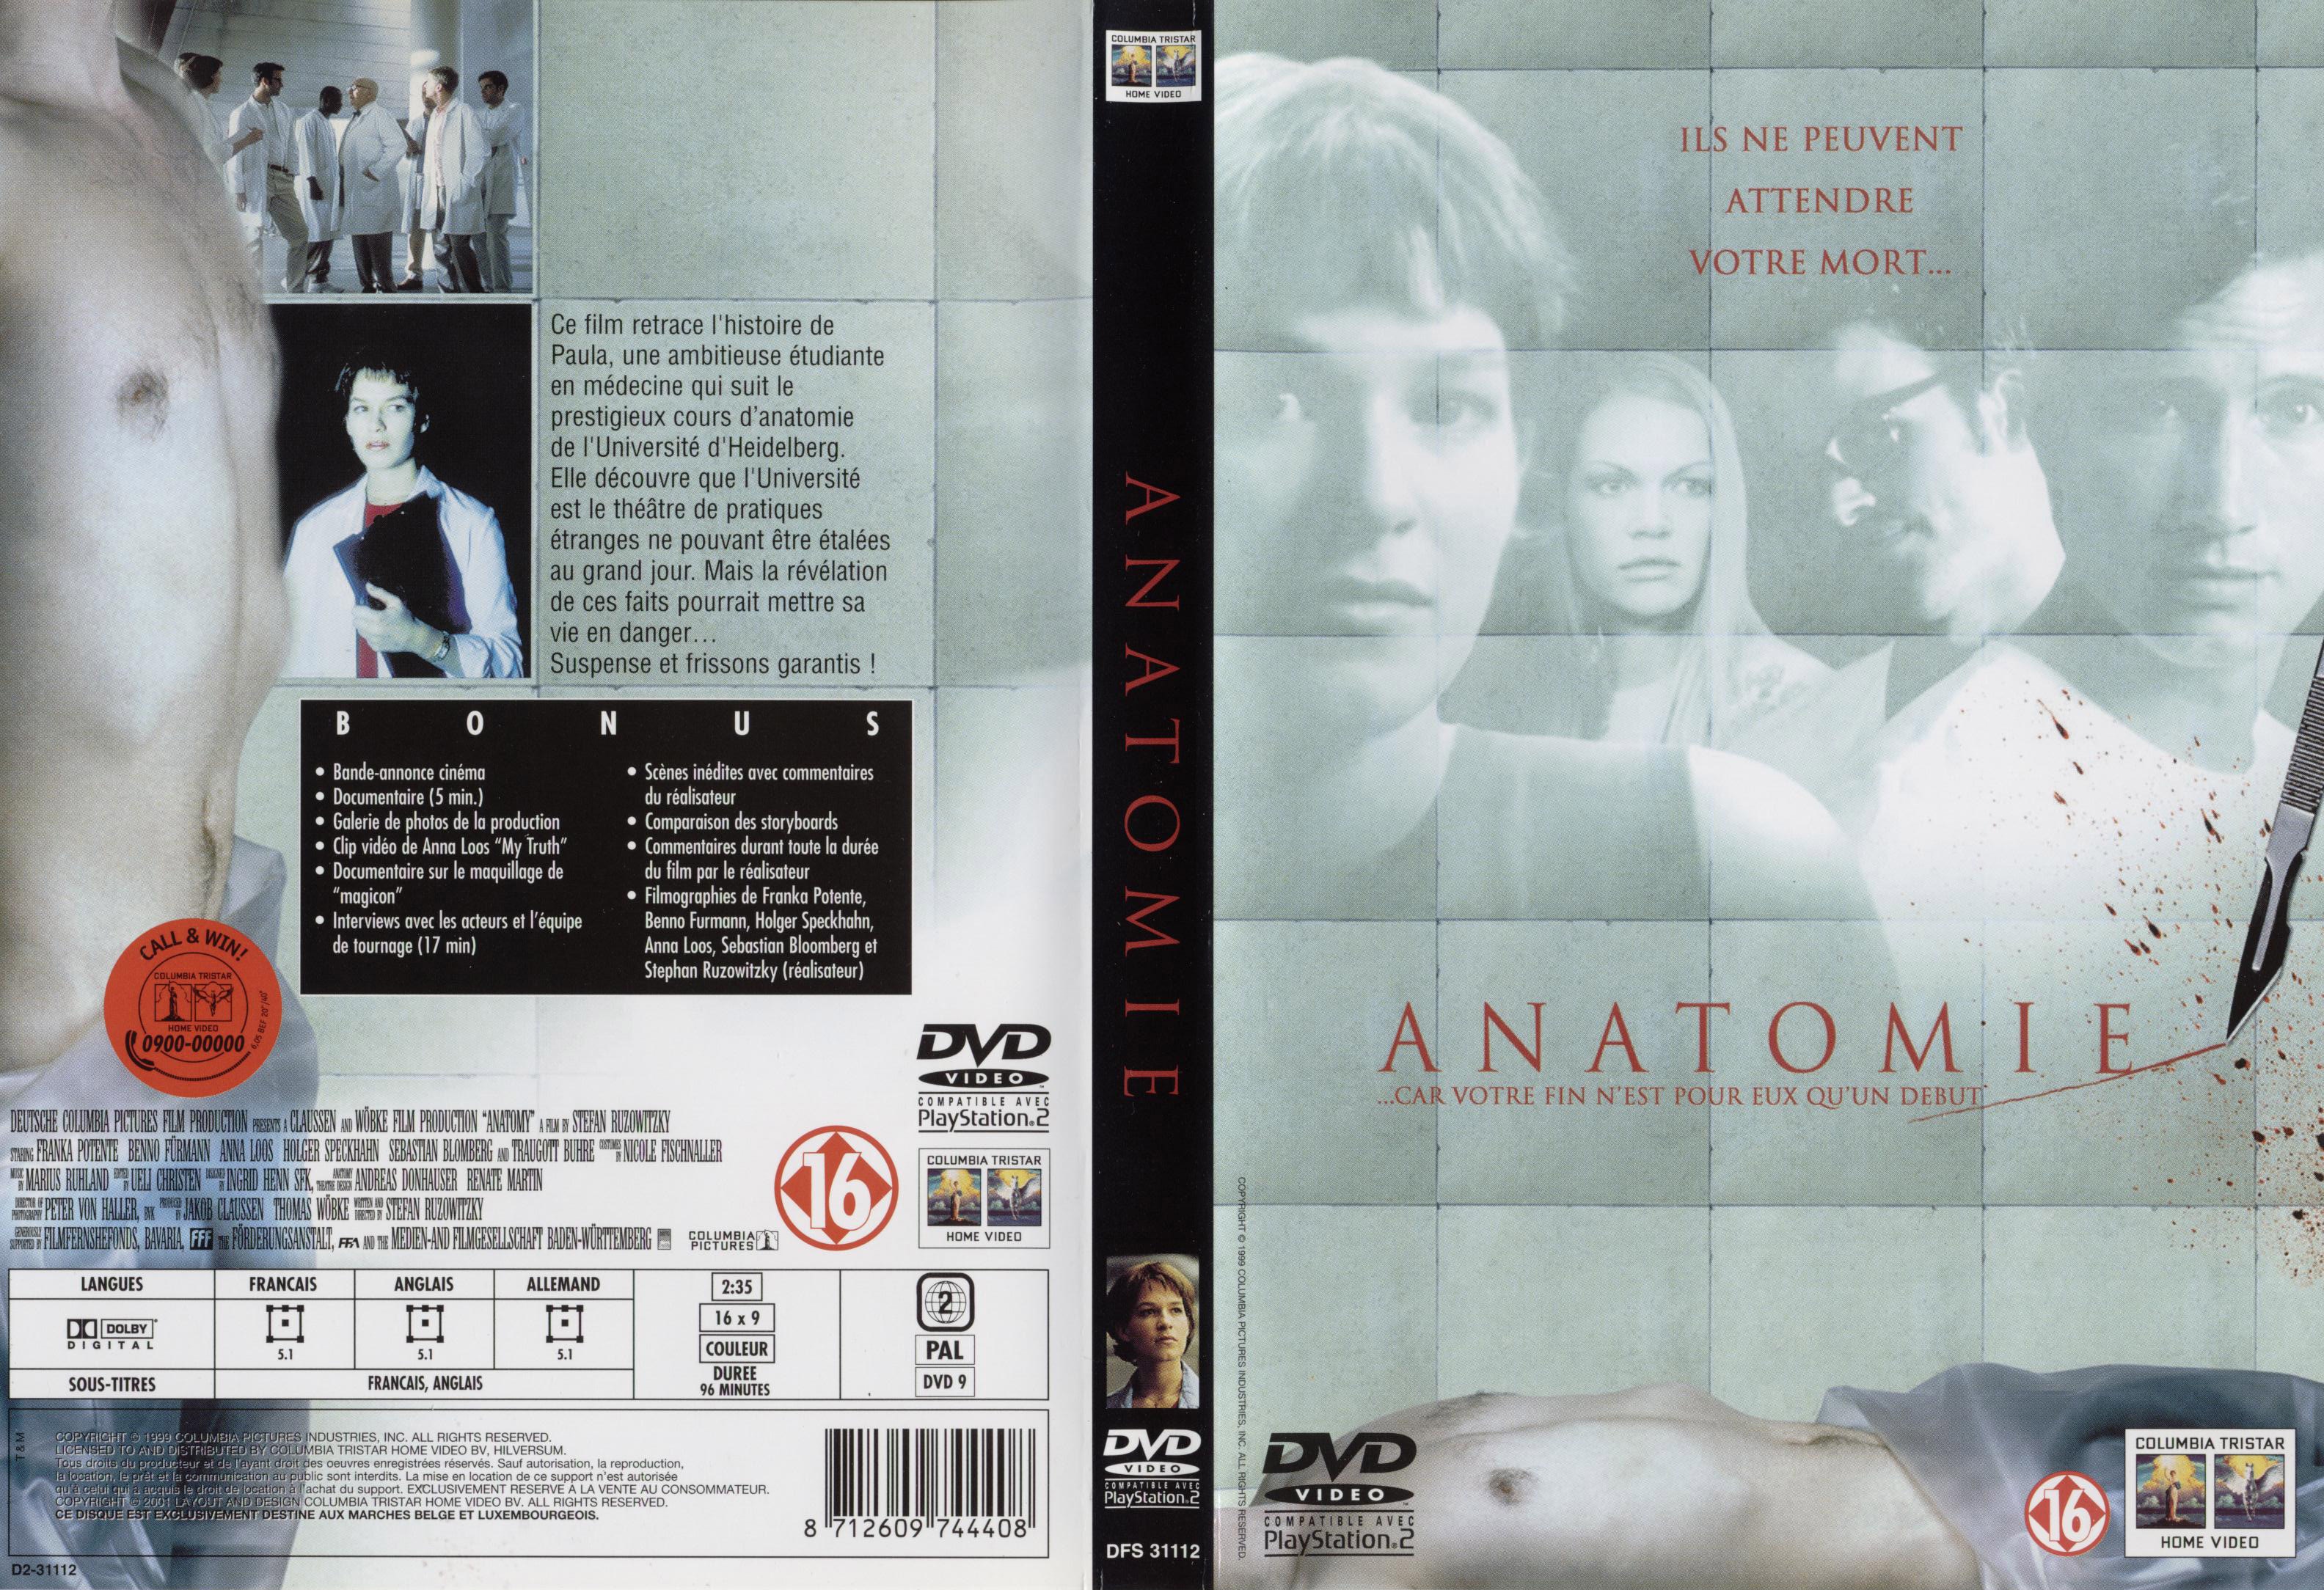 Jaquette DVD Anatomie v2